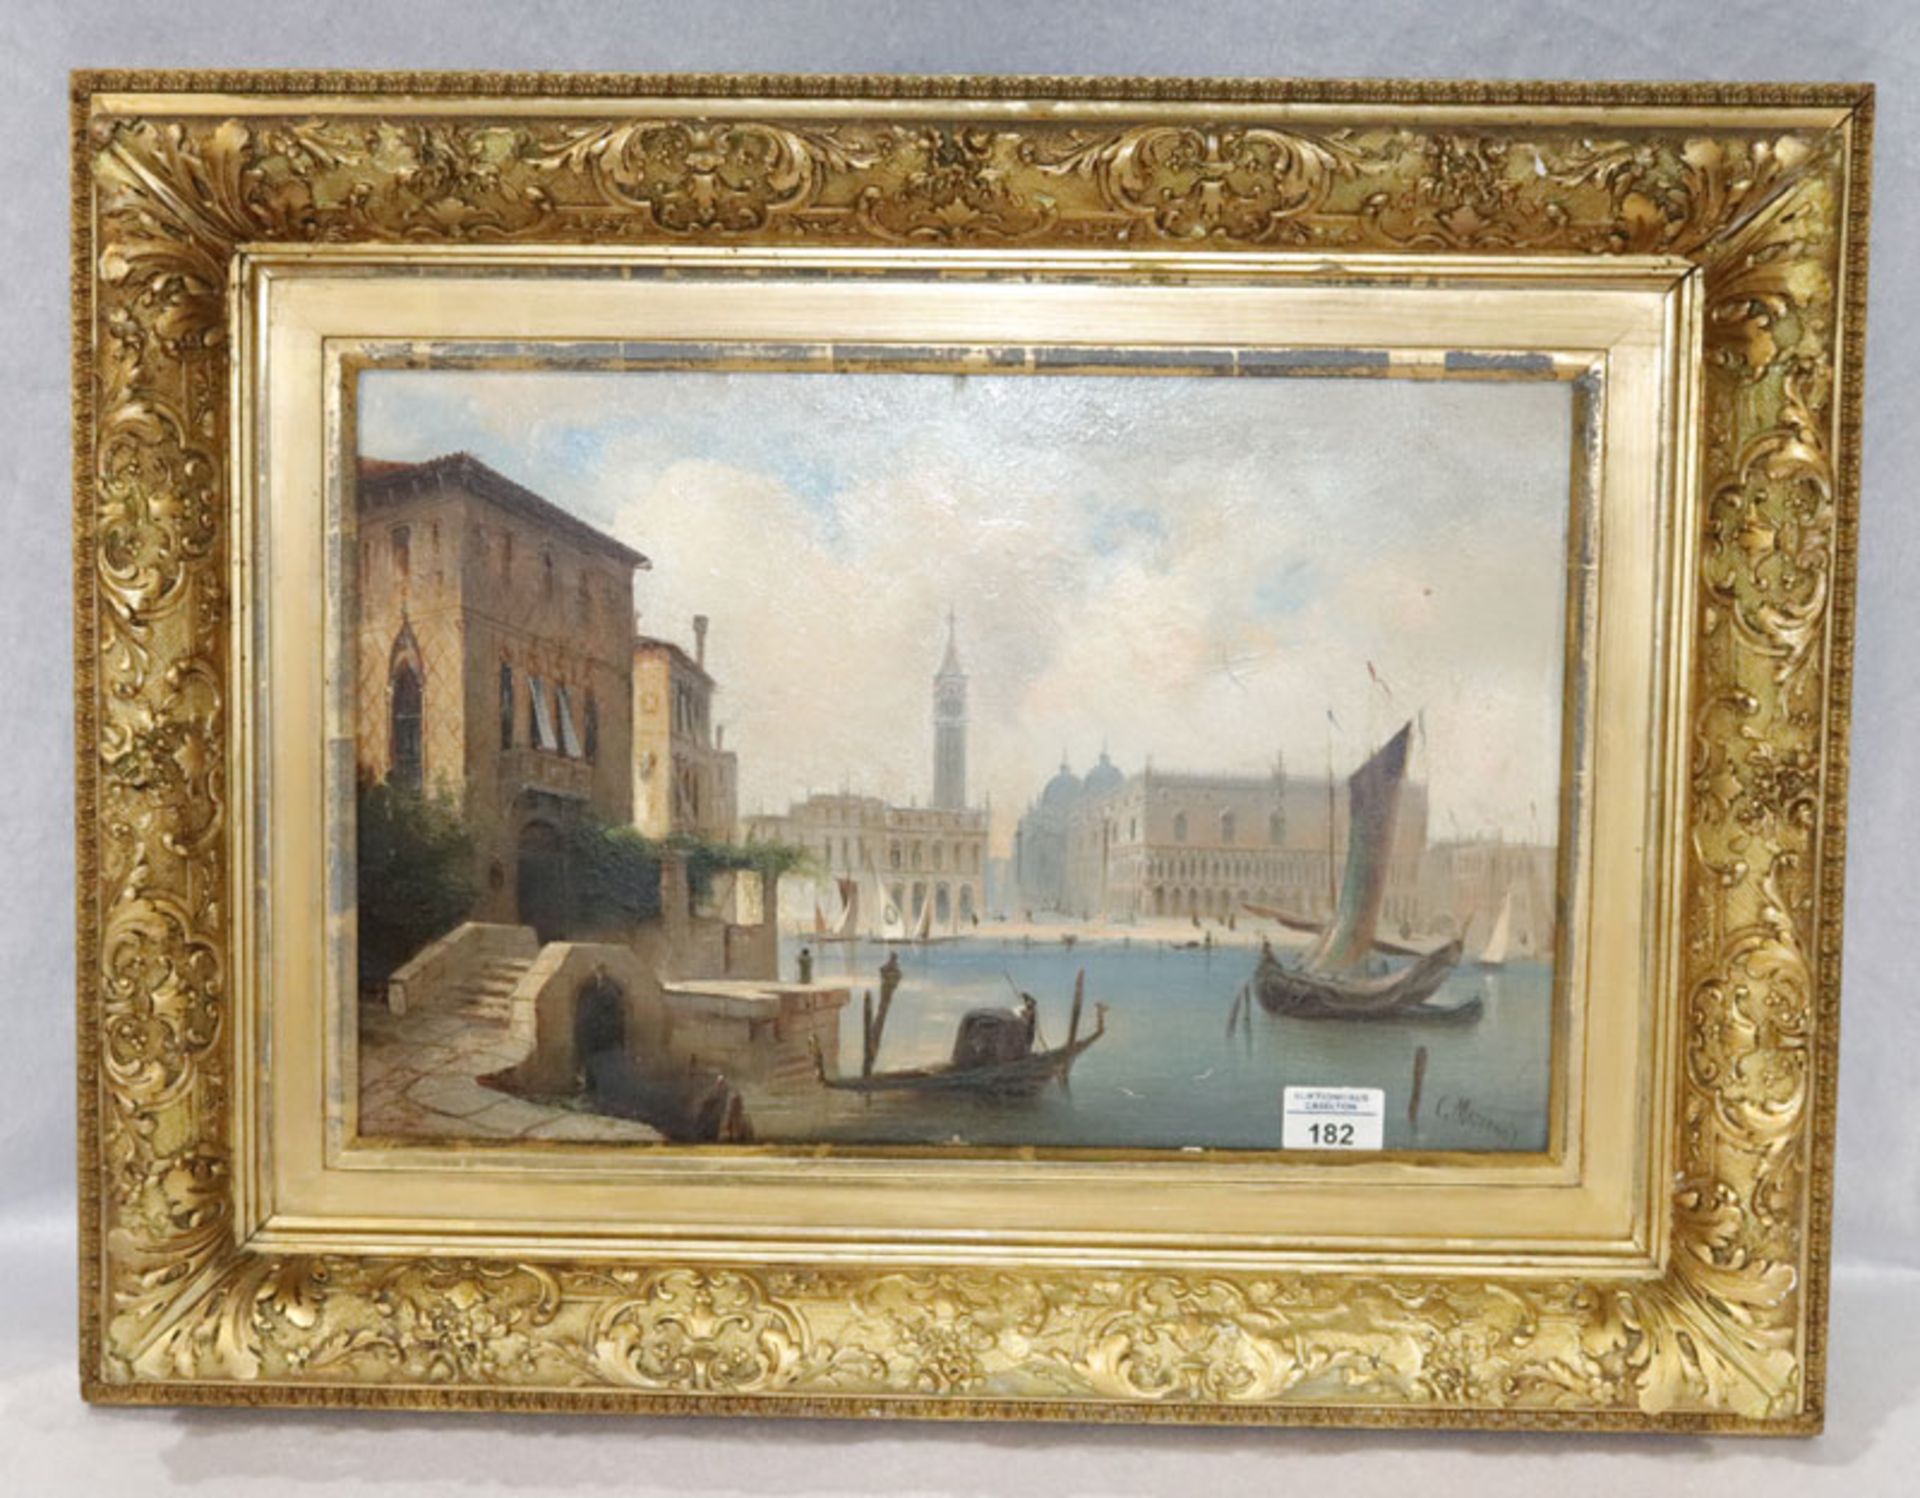 Gemälde ÖL/Blech 'Ansicht von Venedig', signiert C. Mezinna ?, gerahmt, Rahmen beschädigt, incl.